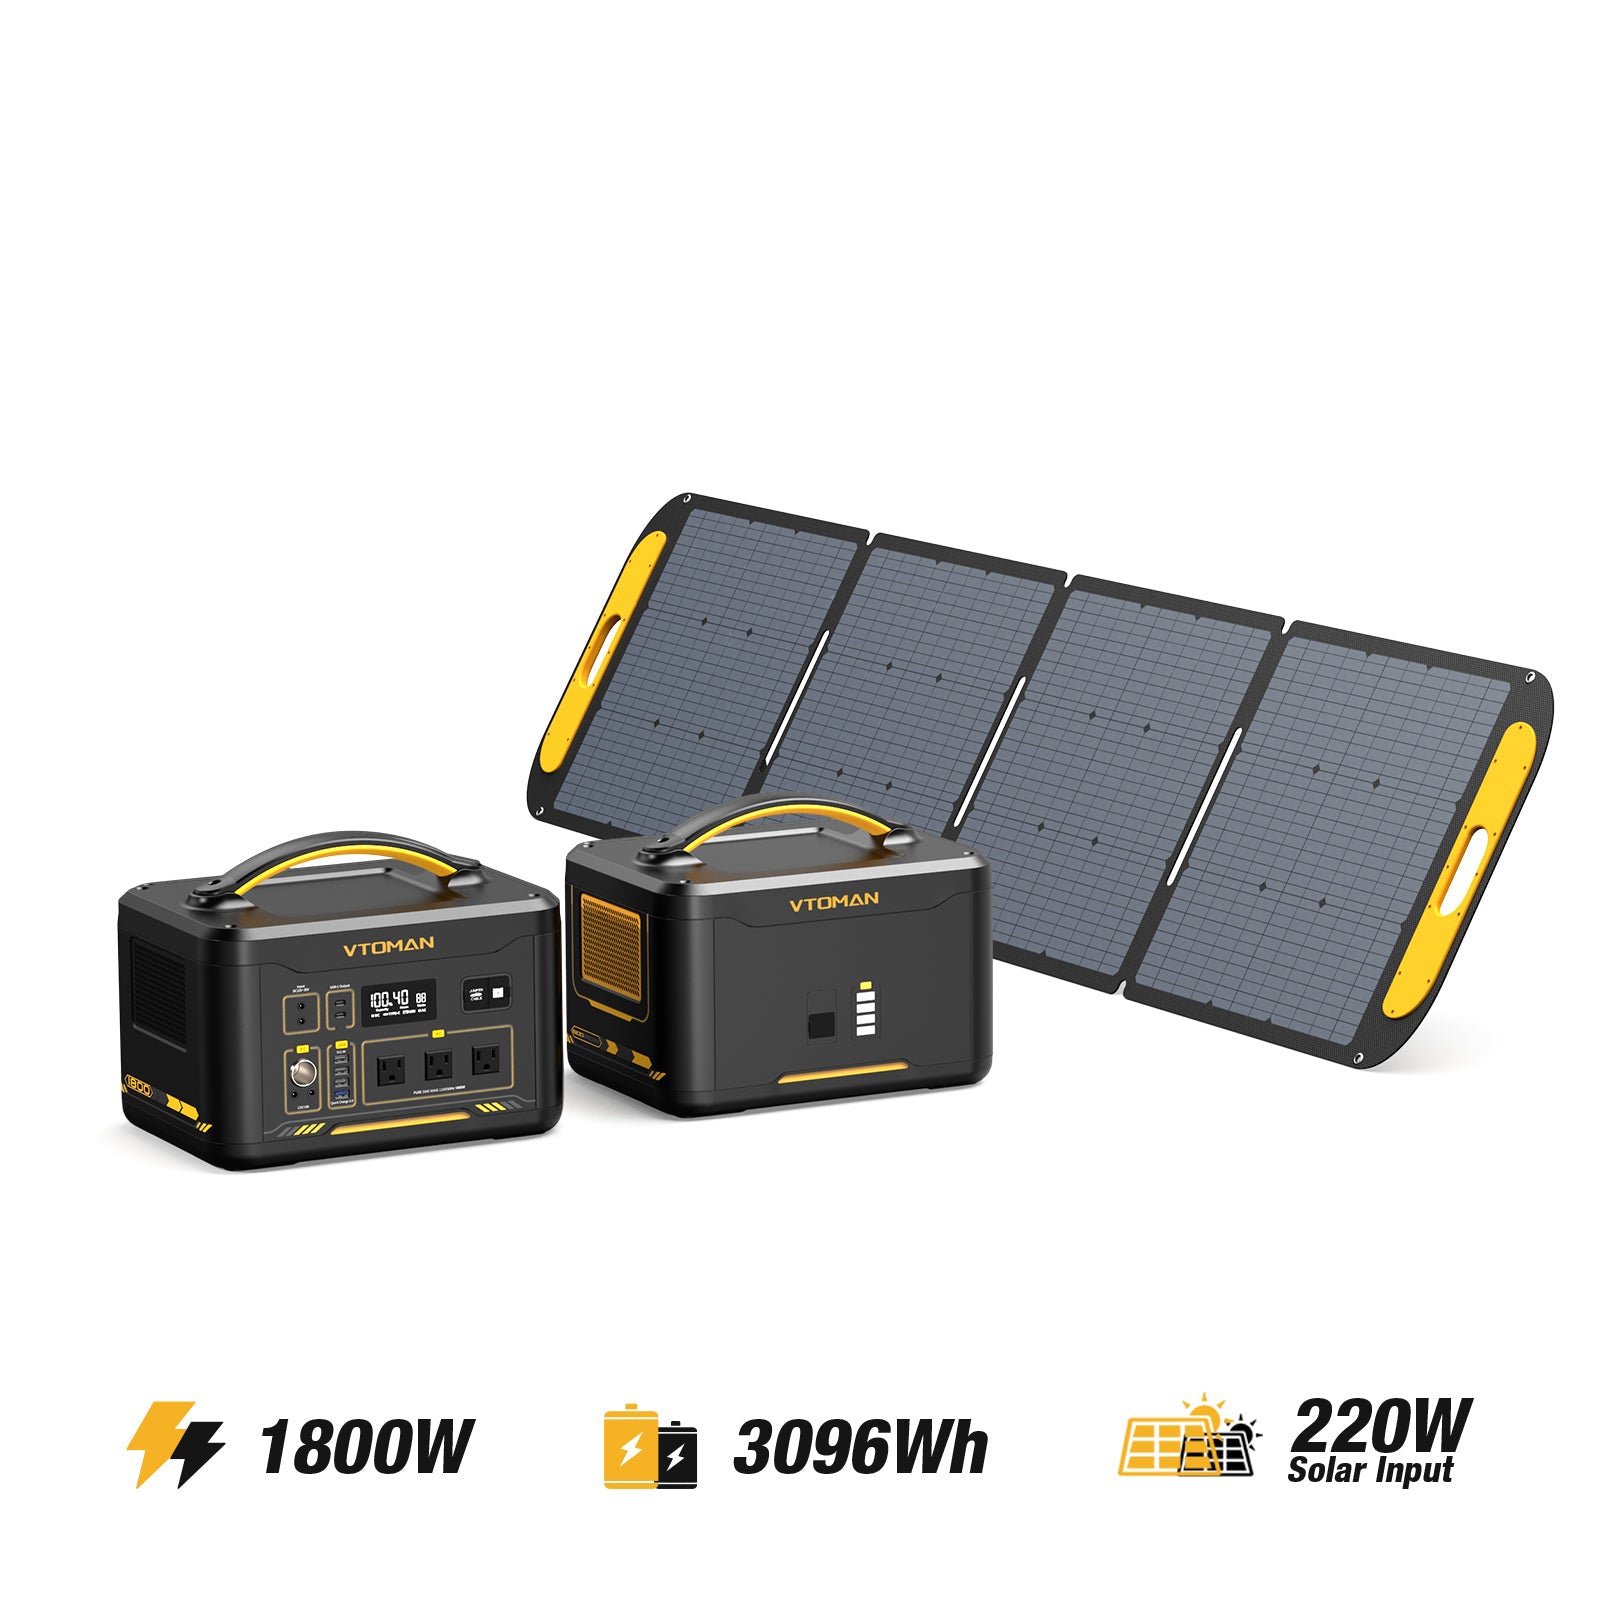 vtoman jump 1800W/3096Wh 220W solar generator